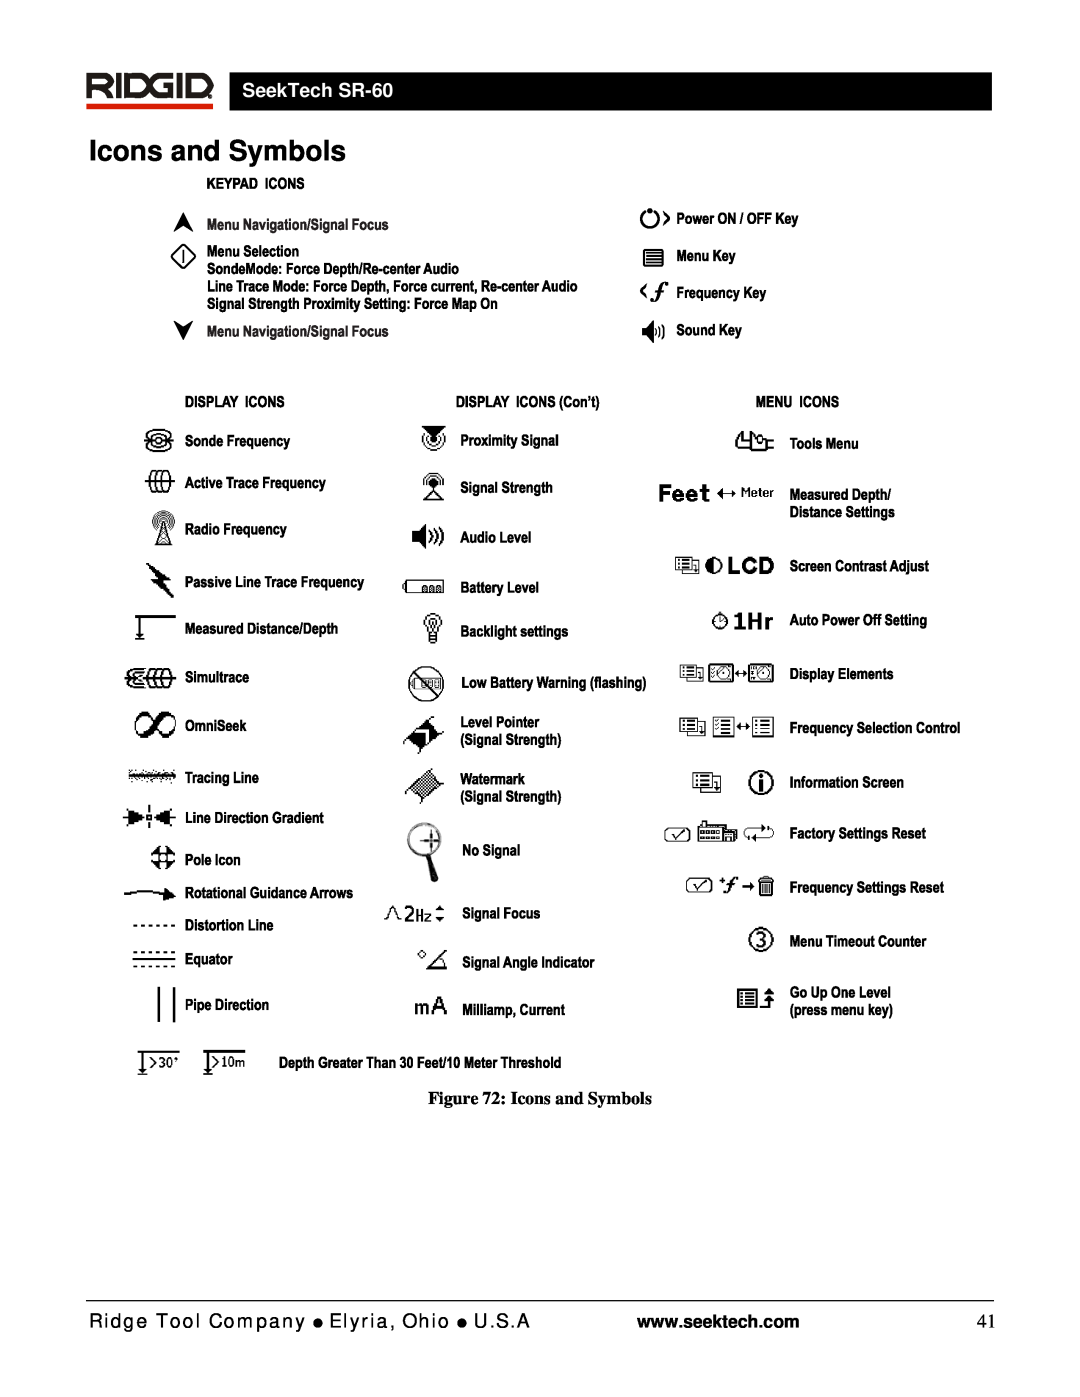 RIDGID manual Icons and Symbols, SeekTech SR-60, Ridge Tool Company  Elyria, Ohio  U.S.A 